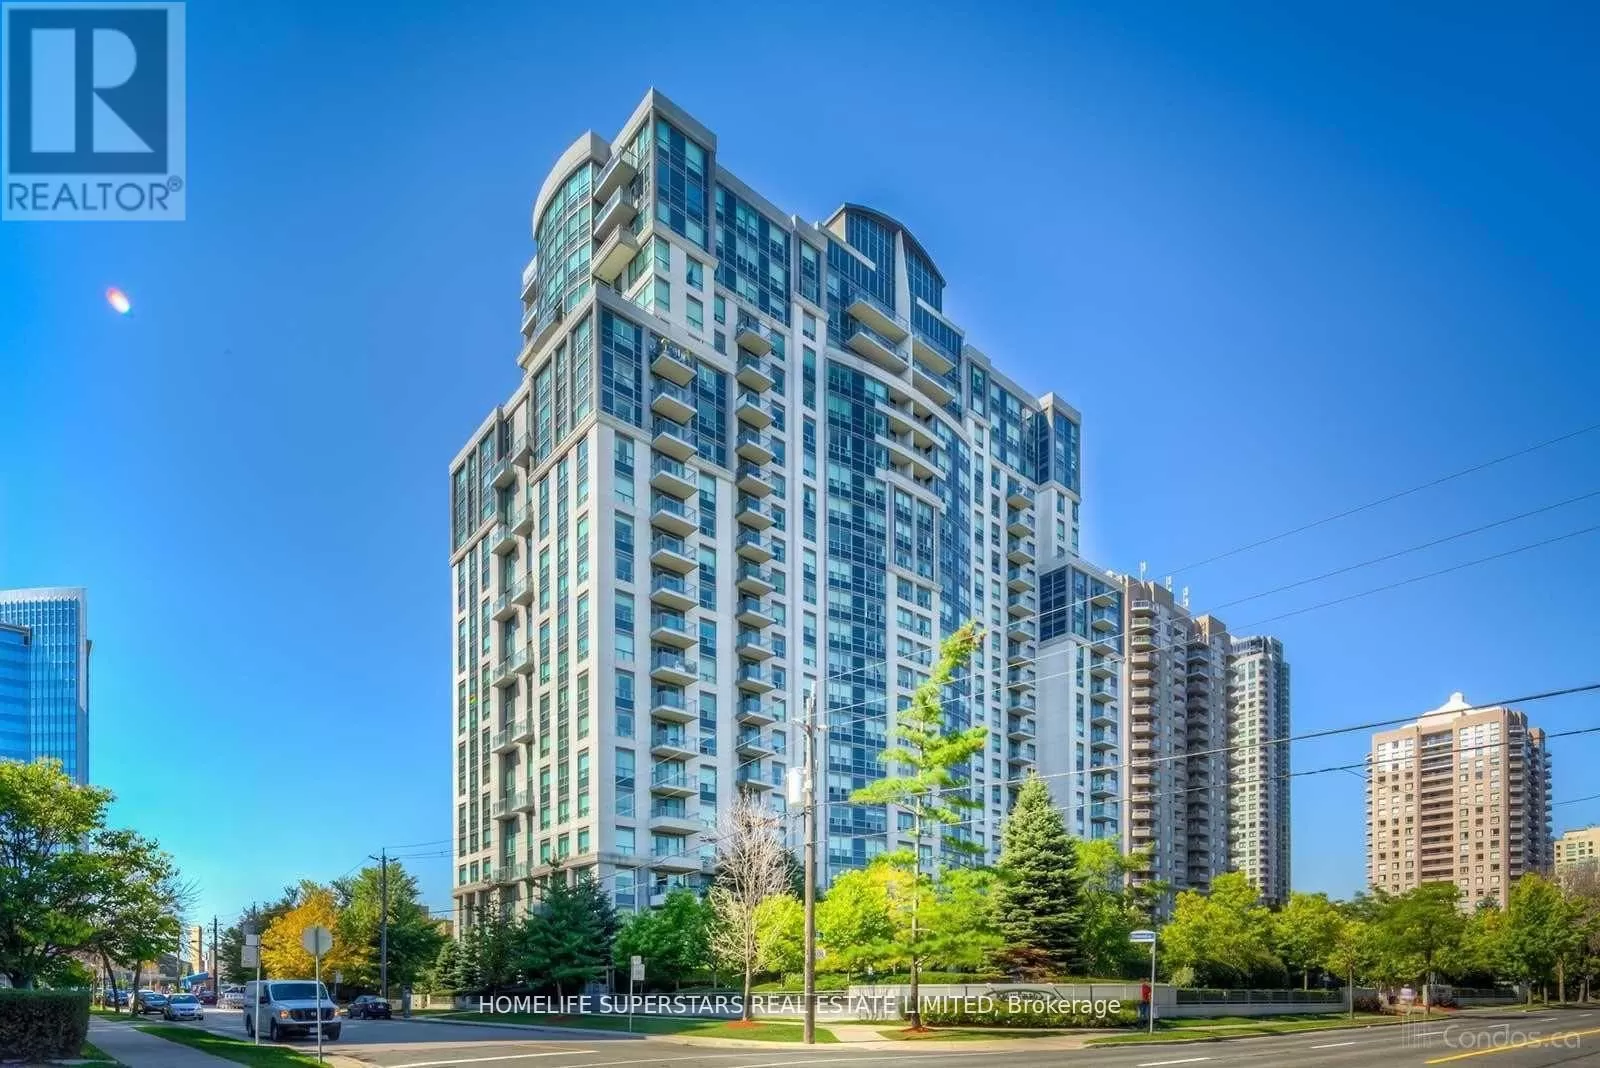 Apartment for rent: 1401 - 188 Doris Avenue, Toronto, Ontario M2N 6Z5